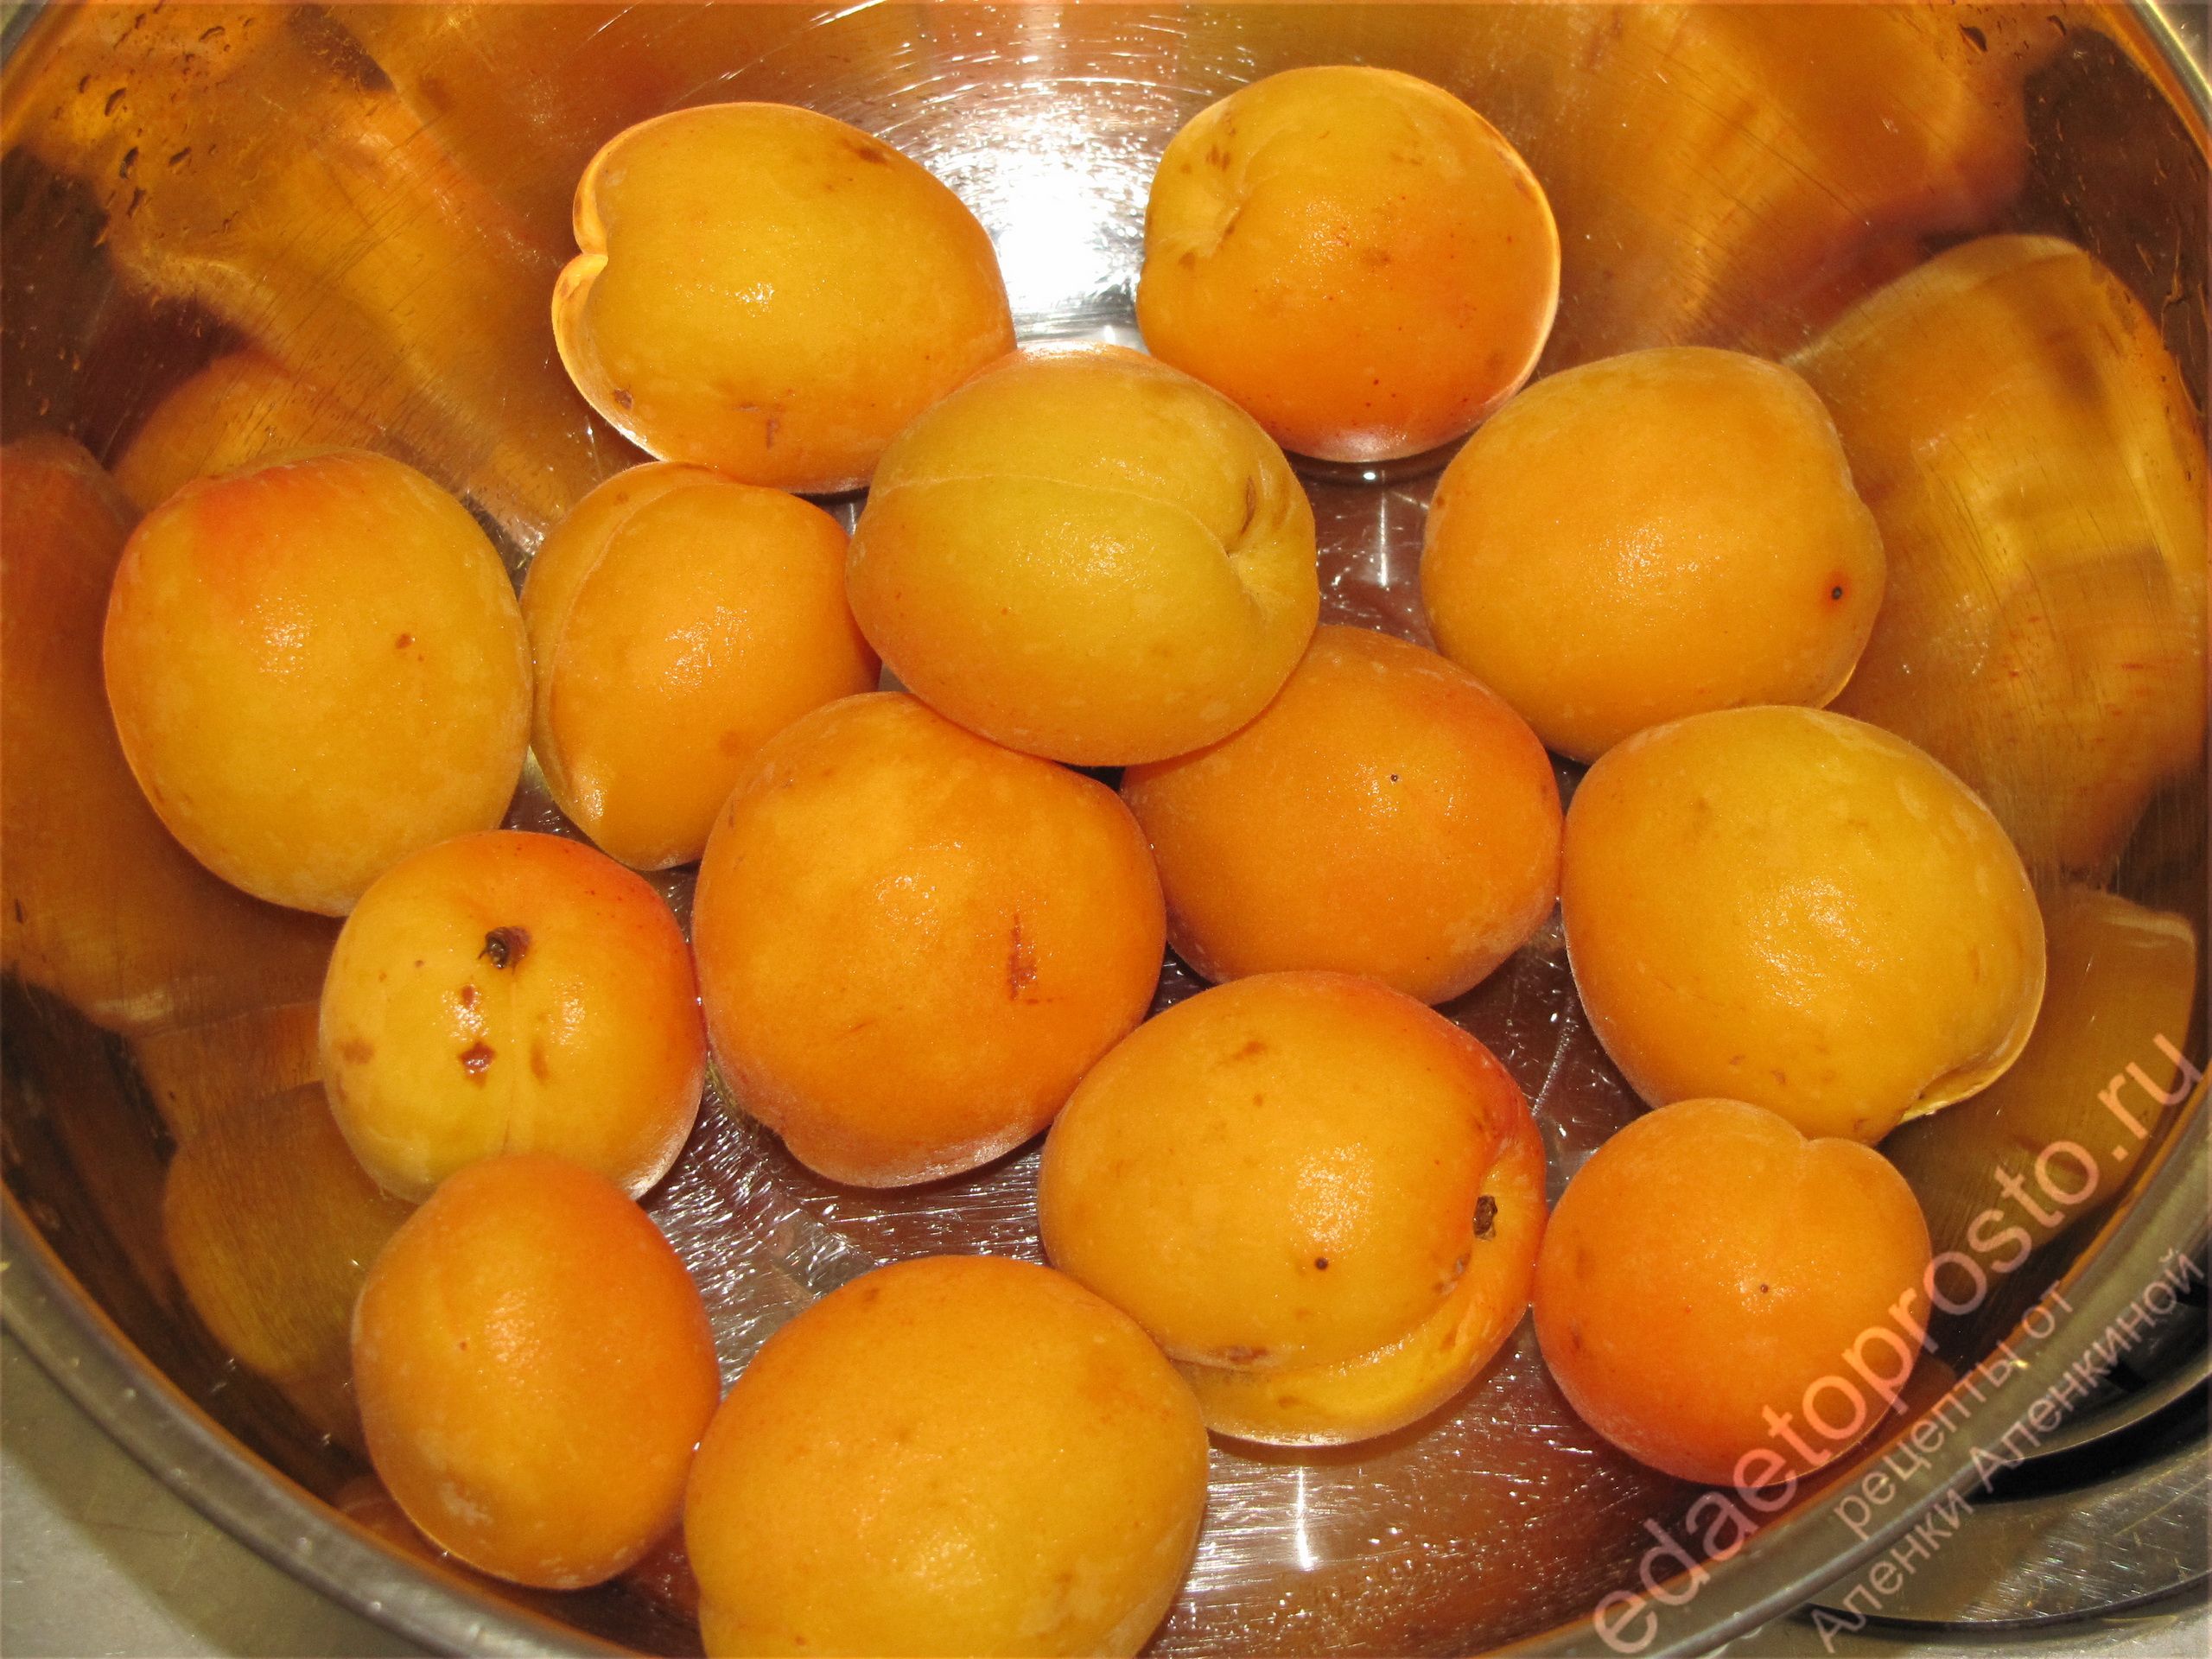 фото абрикосов в миске, красивое фото фруктов